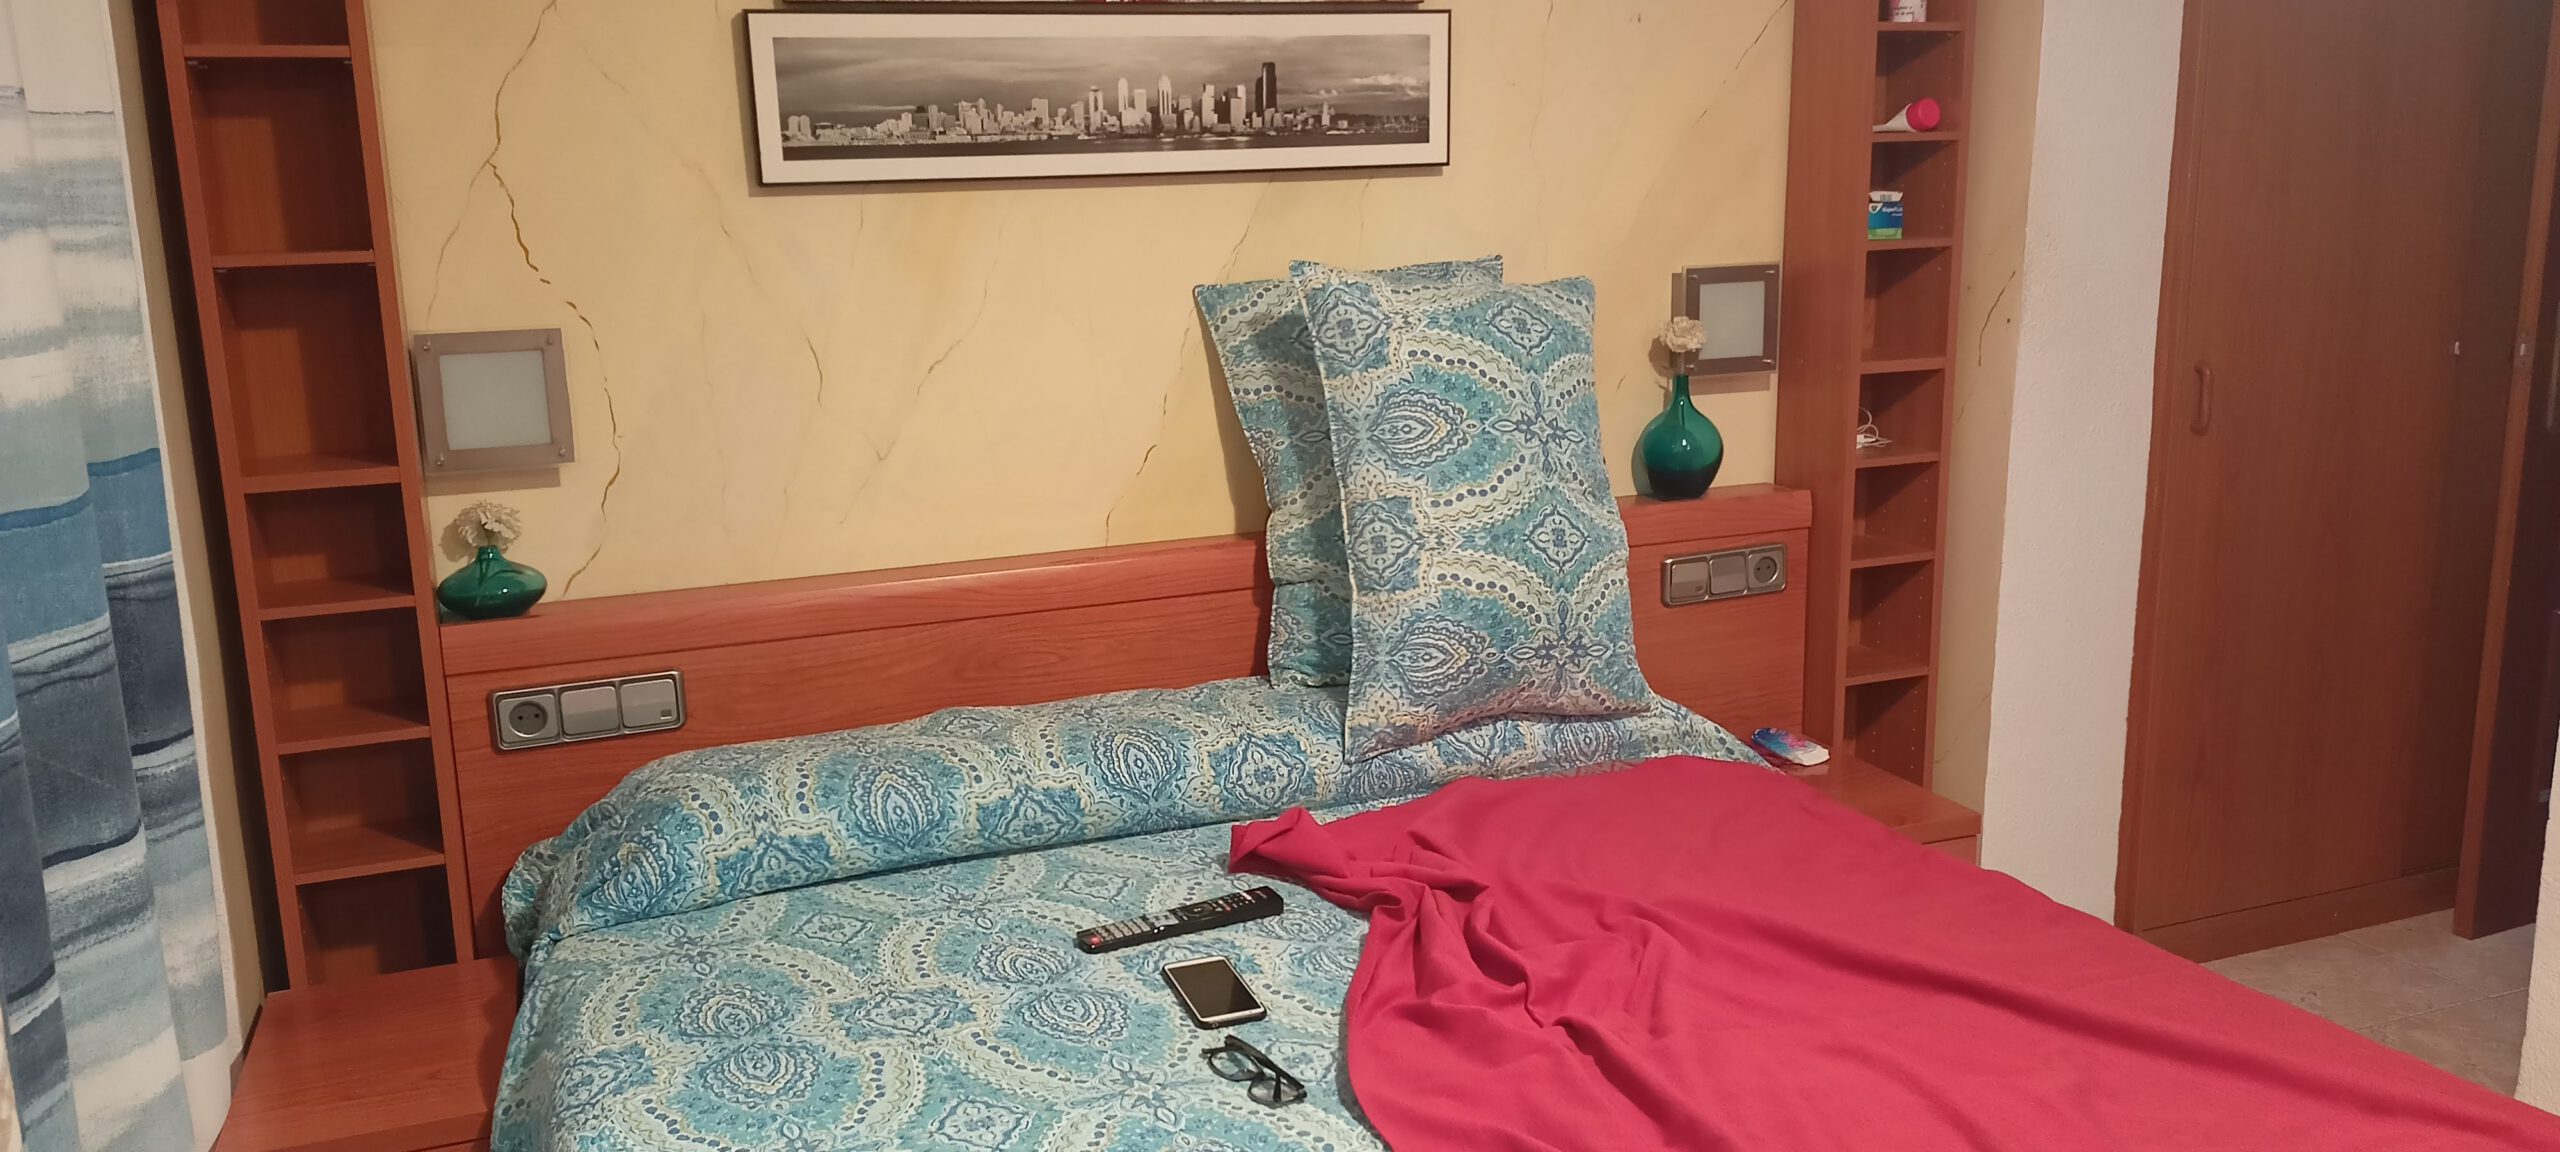 Dormitorio sin Home Staging